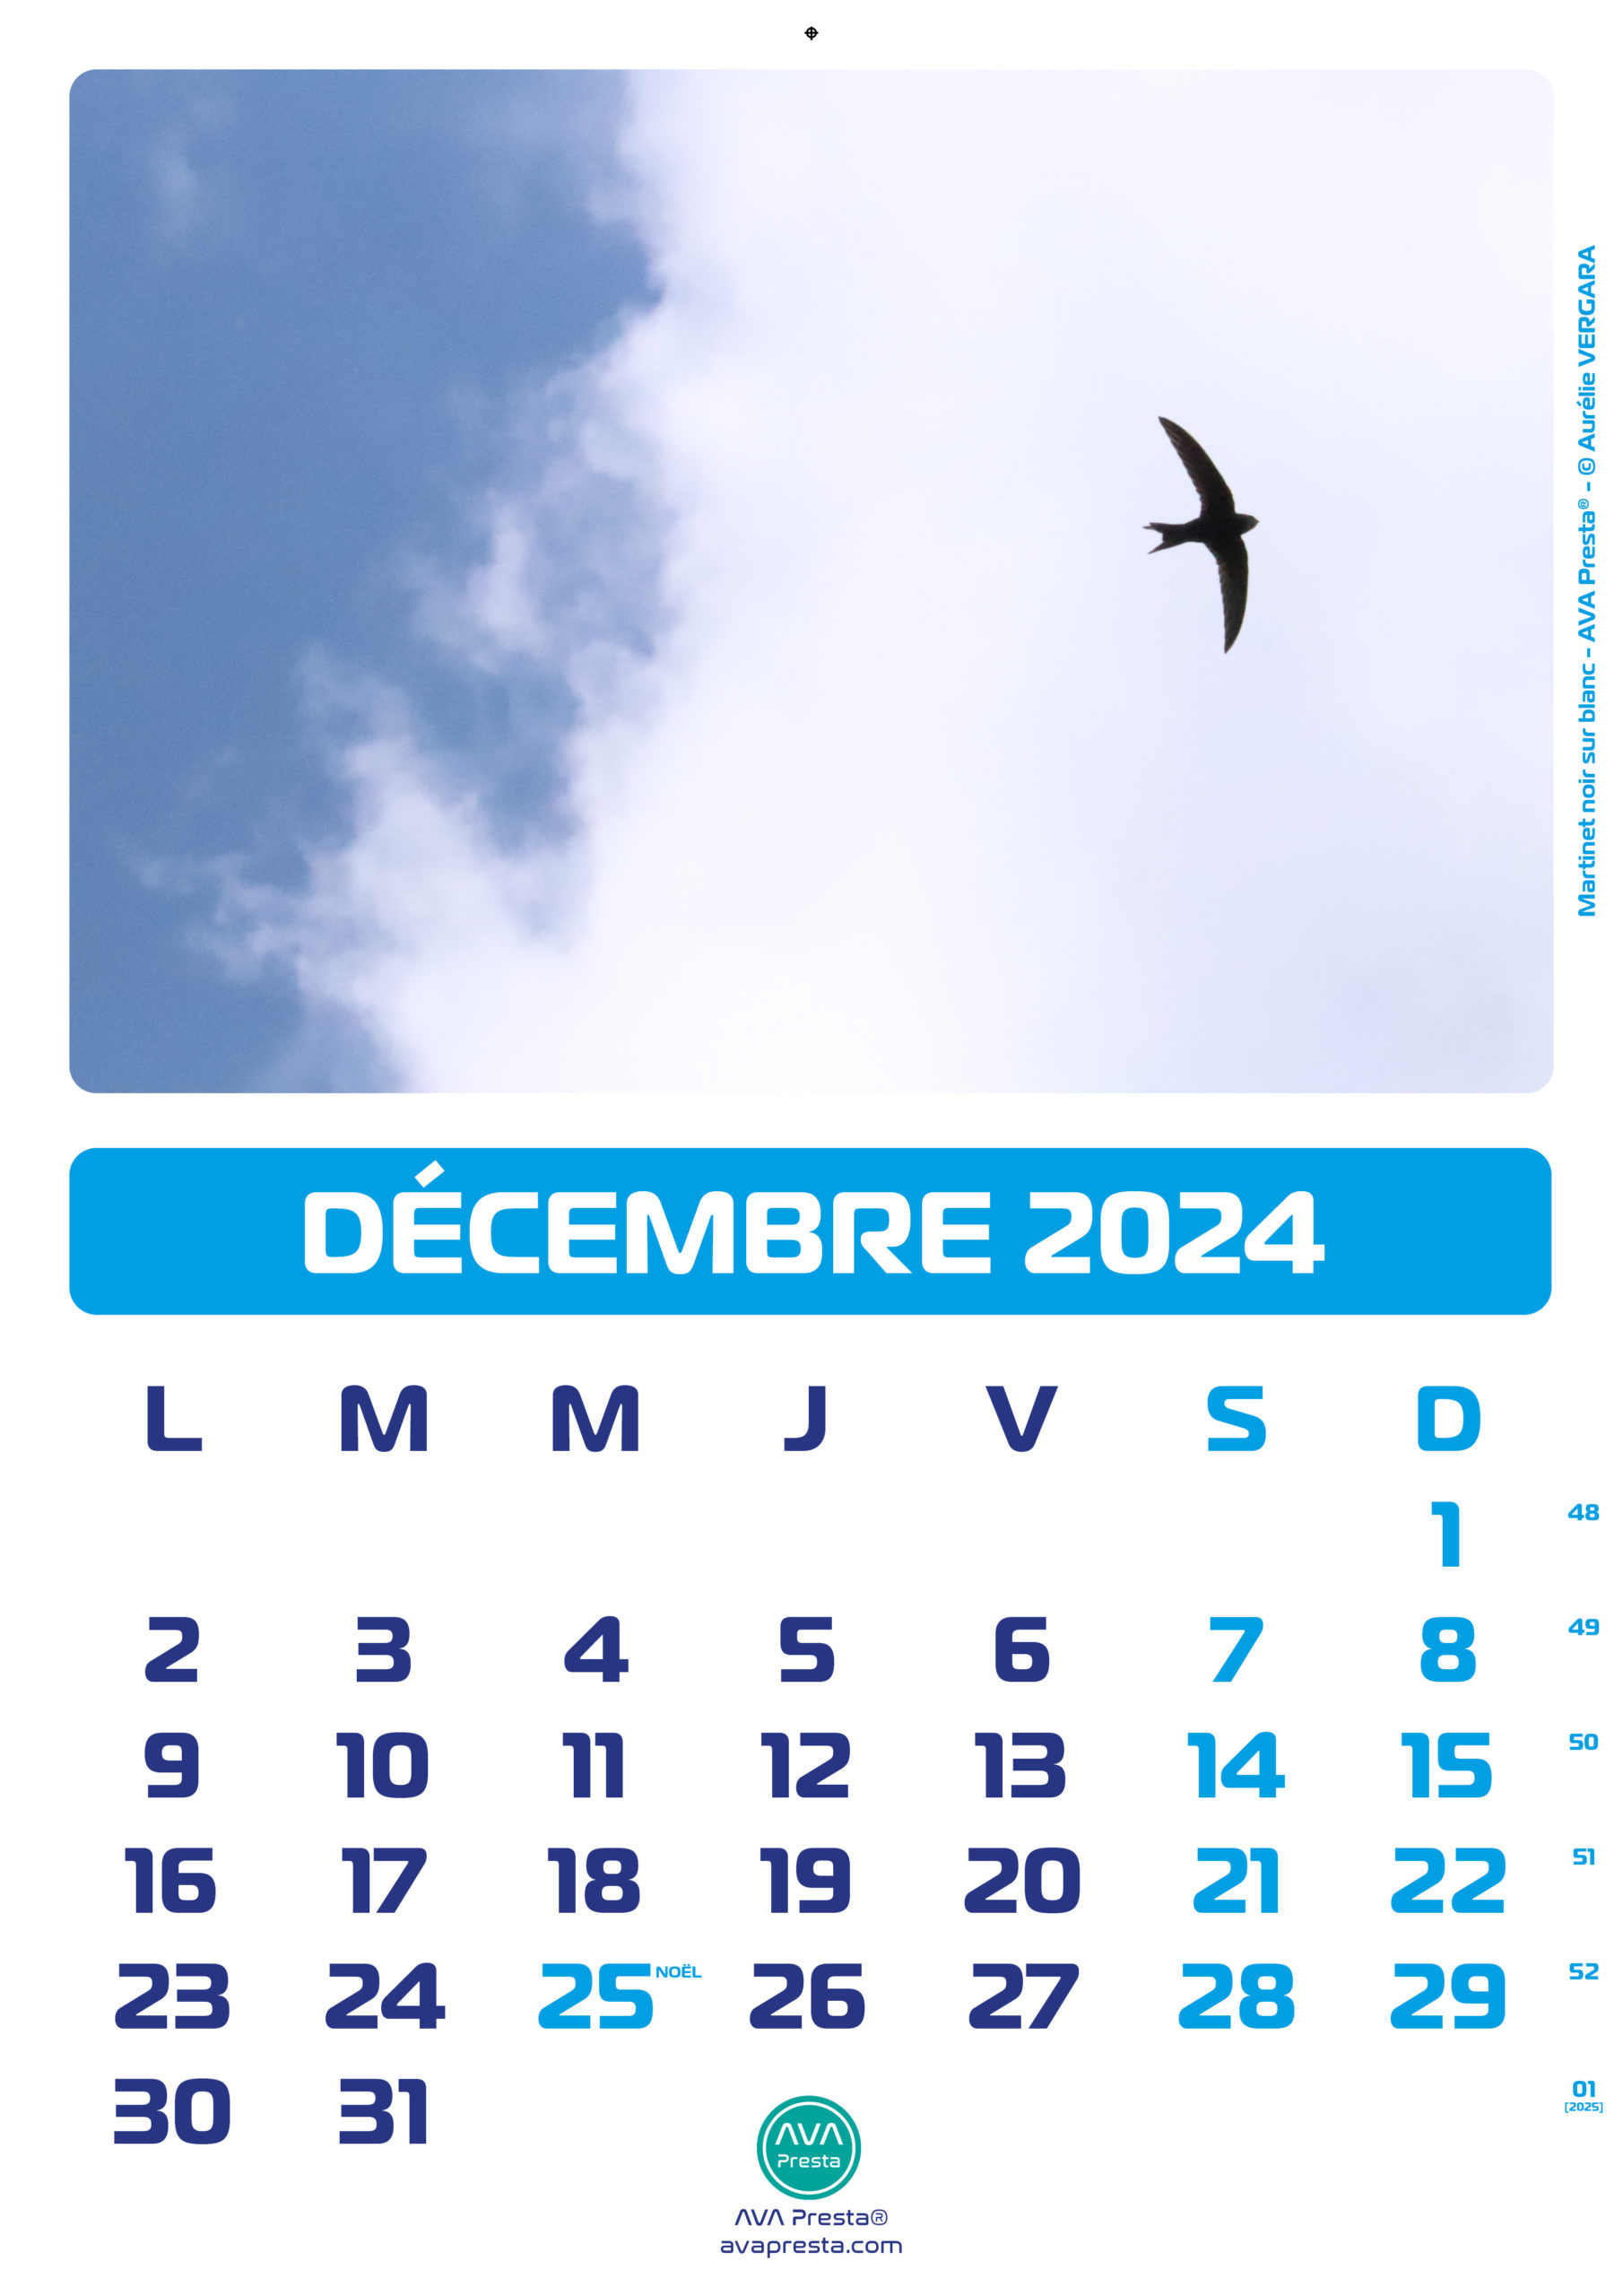 AVA Presta - Calendrier Calend'Art 2023 - Décembre